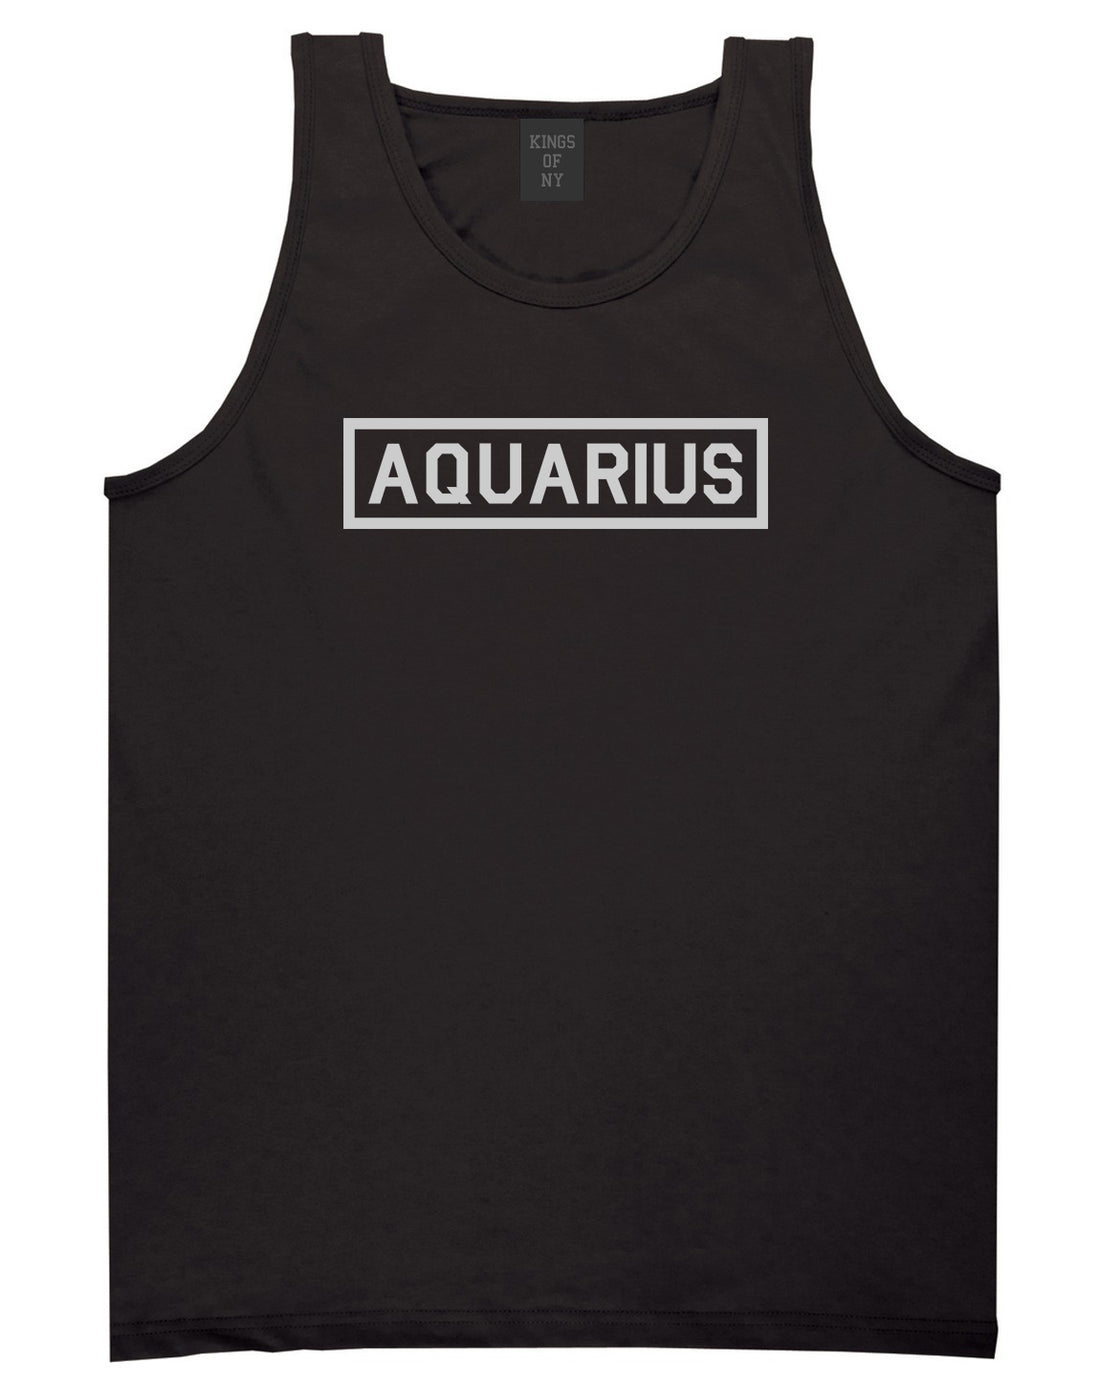 Aquarius Horoscope Sign Mens Black Tank Top Shirt by KINGS OF NY